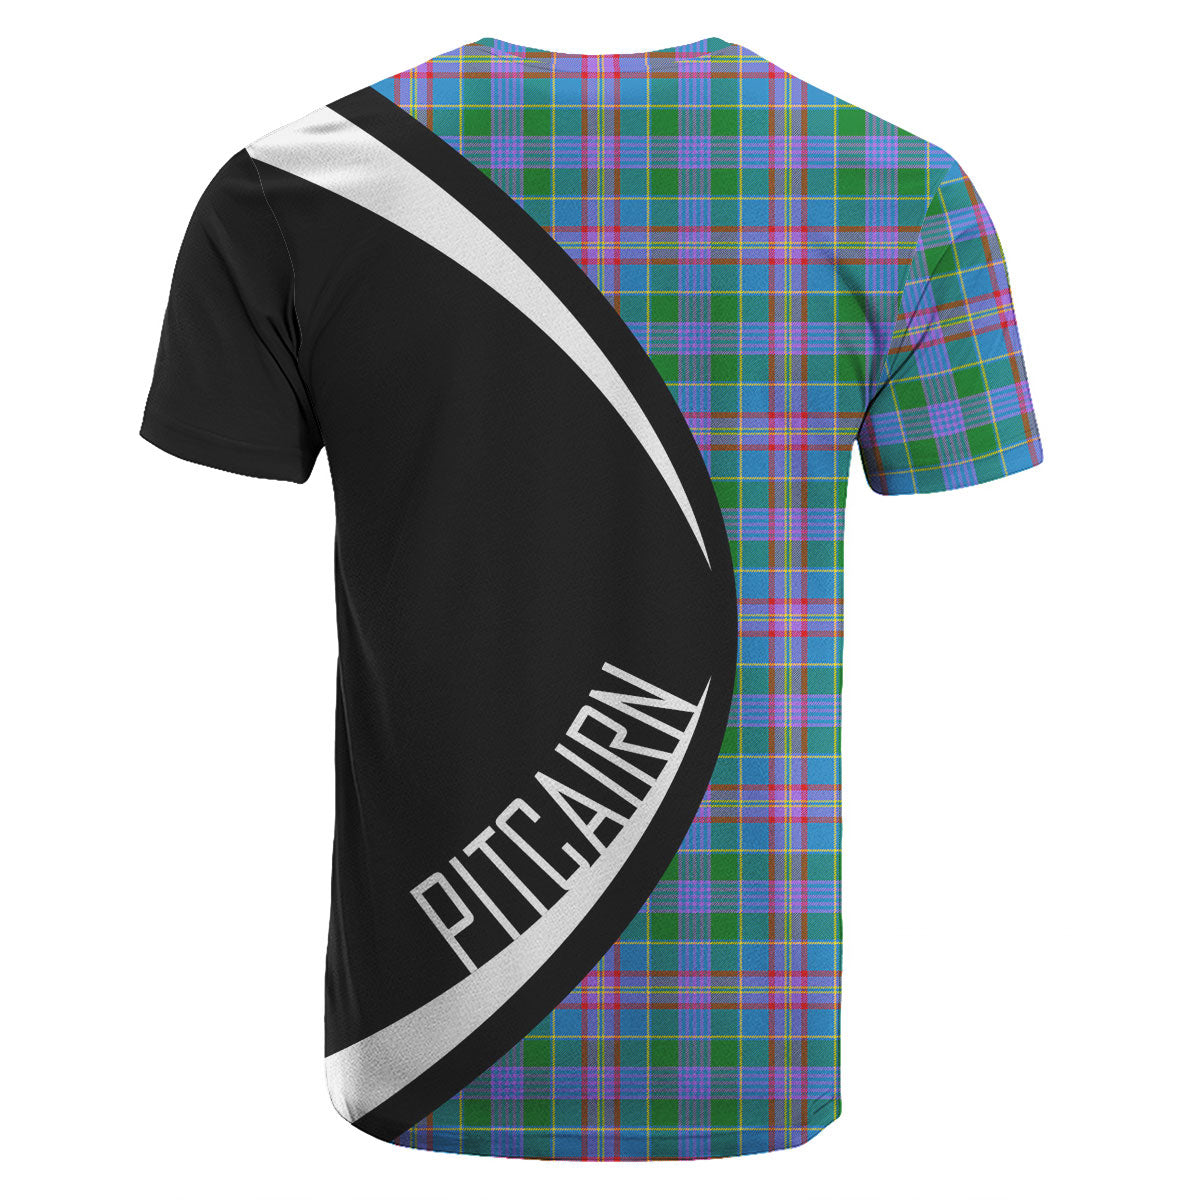 Pitcairn Hunting Tartan Crest T-shirt - Circle Style